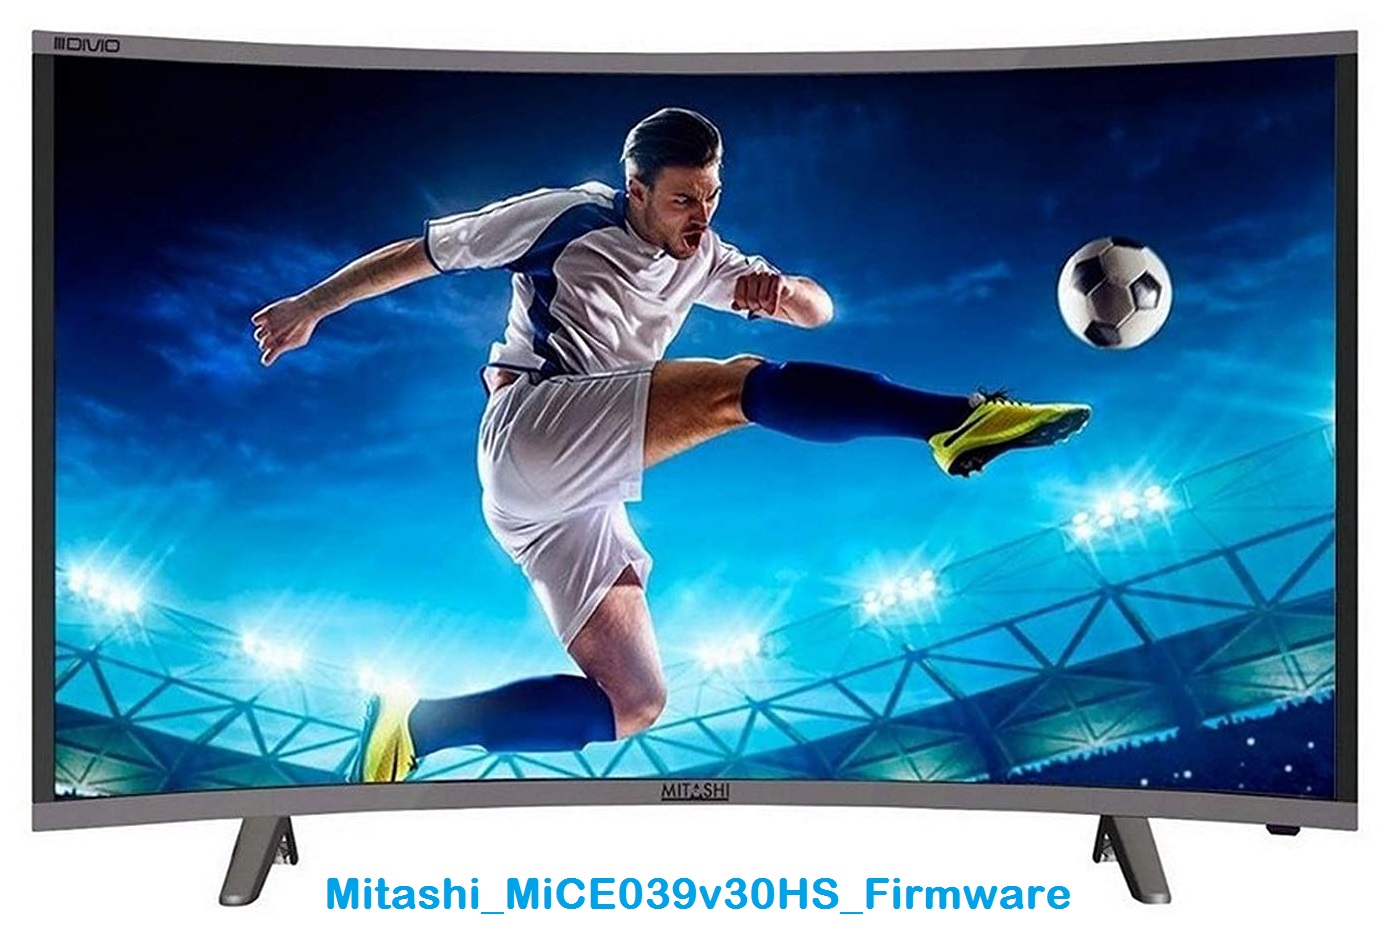 Mitashi Mice039V30 Hs_Firmware